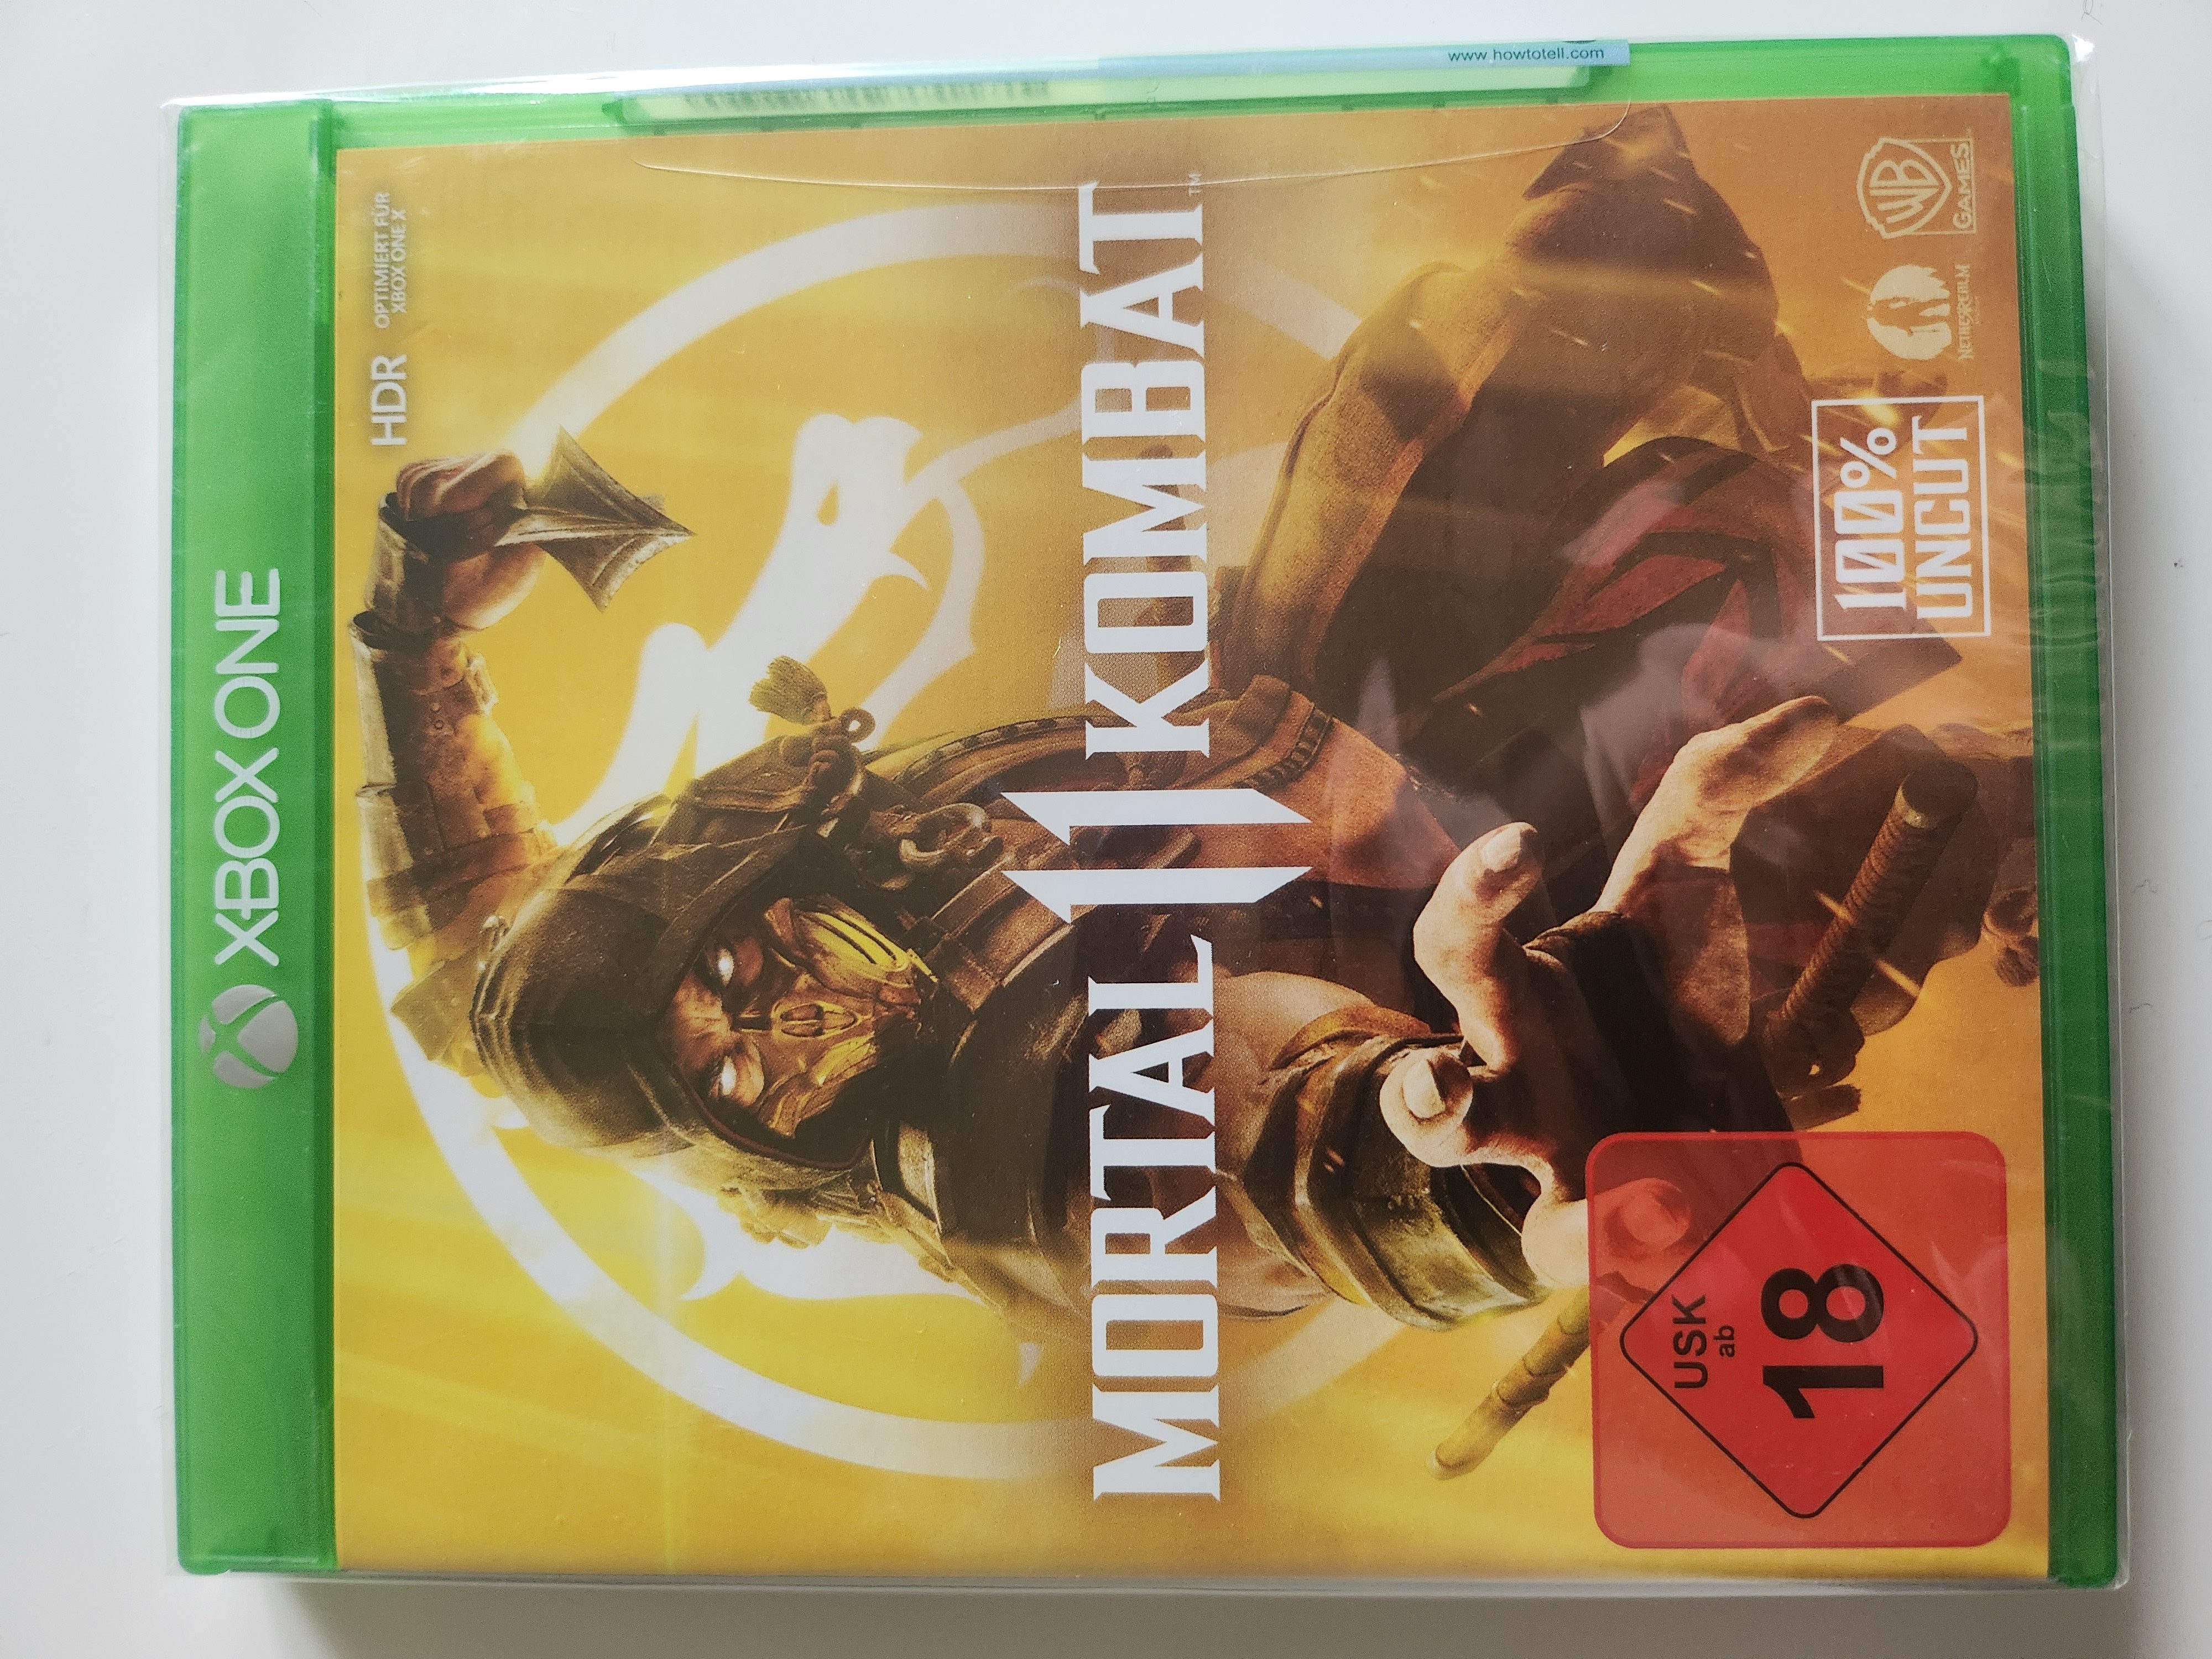 Mortal Kombat 11 Xbox